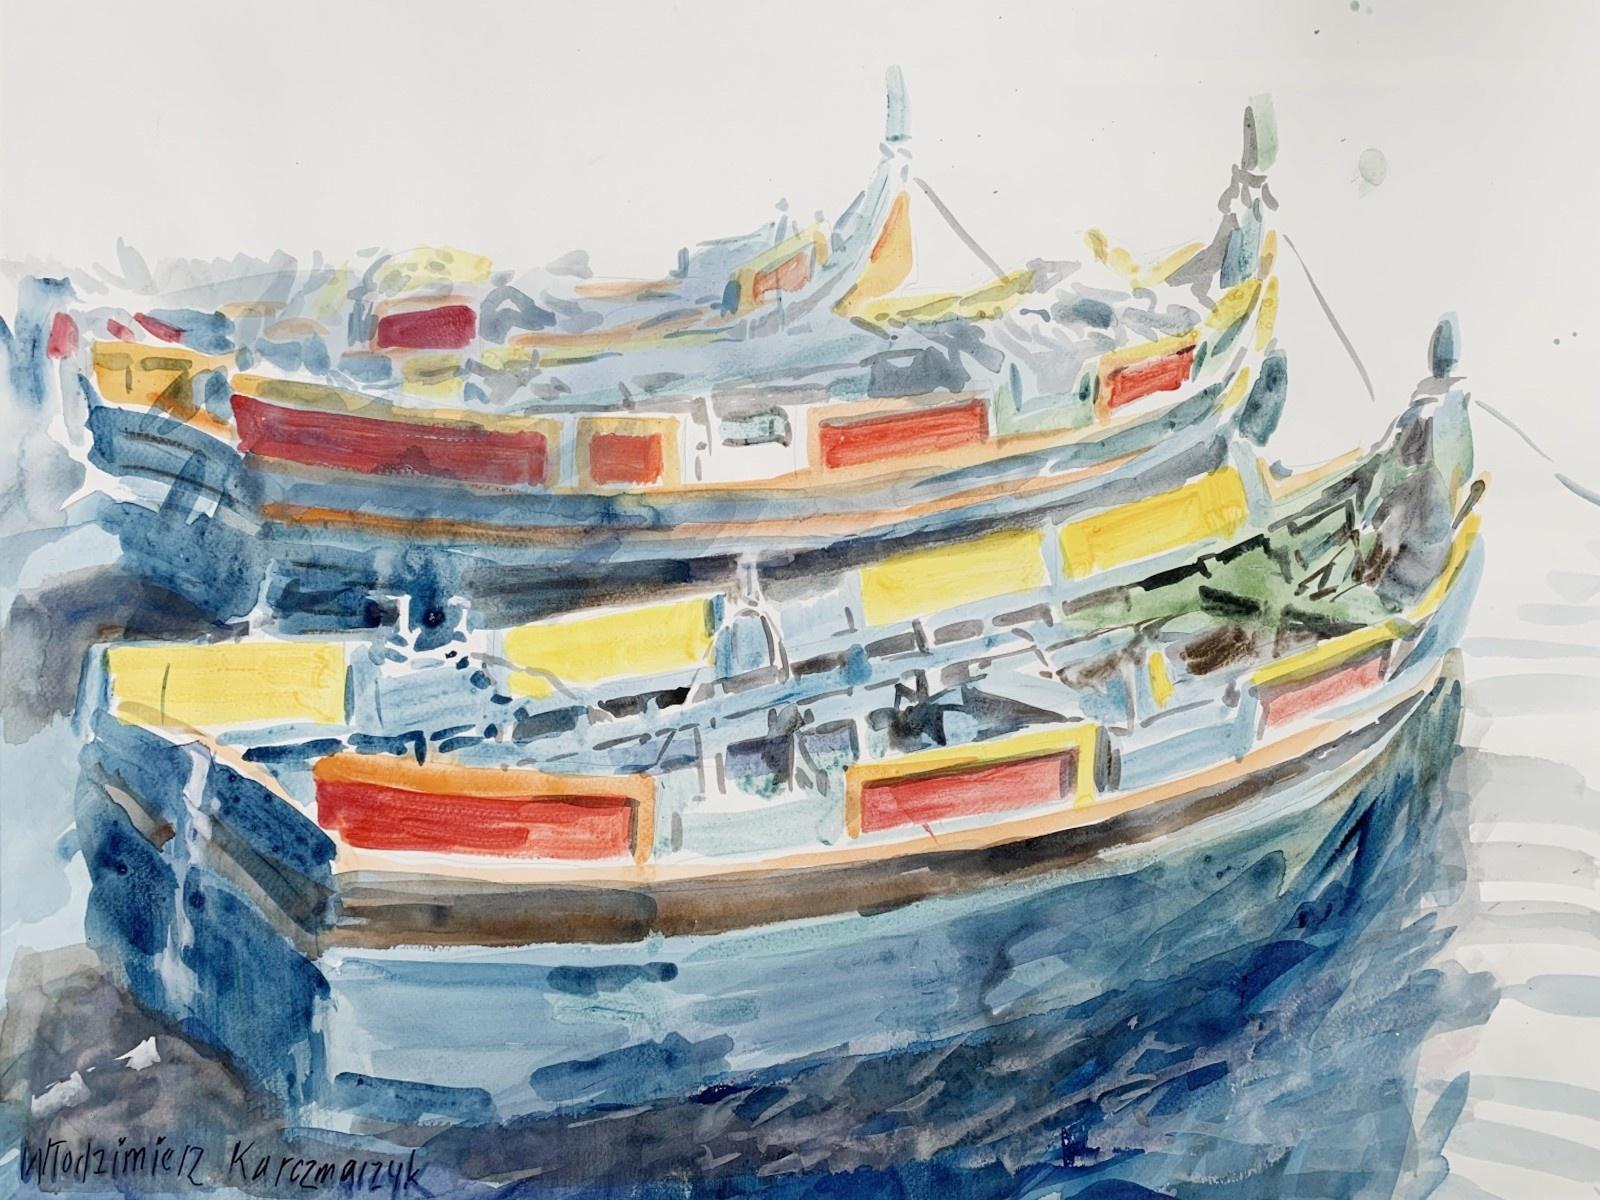 Włodzimierz Karczmarzyk Figurative Art - Maltan boats - Watercolor, Architecture, Realistic, Classic, Polish artist